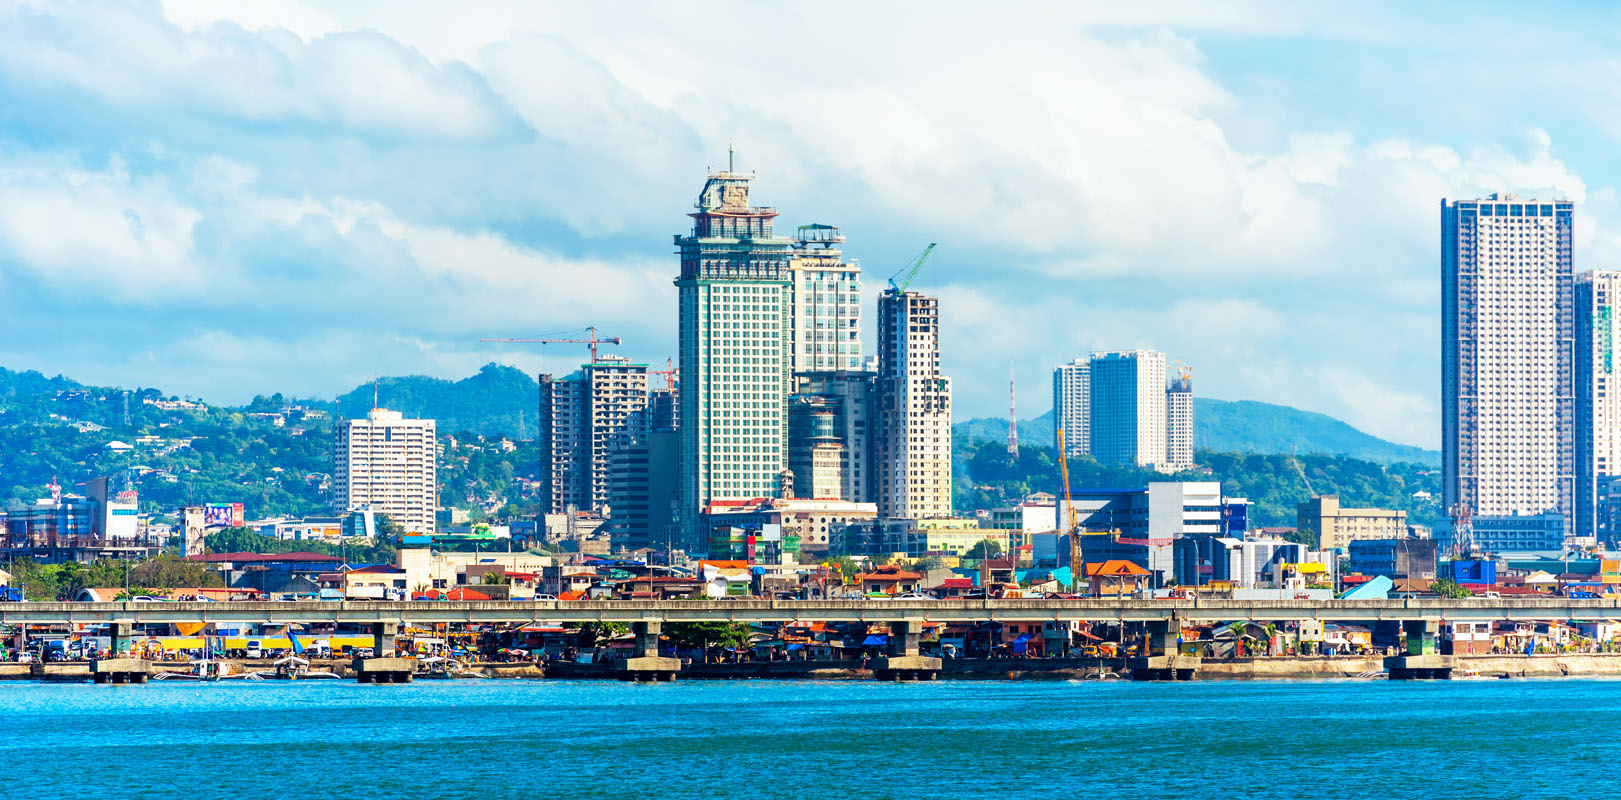 Best places to visit in Visayas - Cebu city